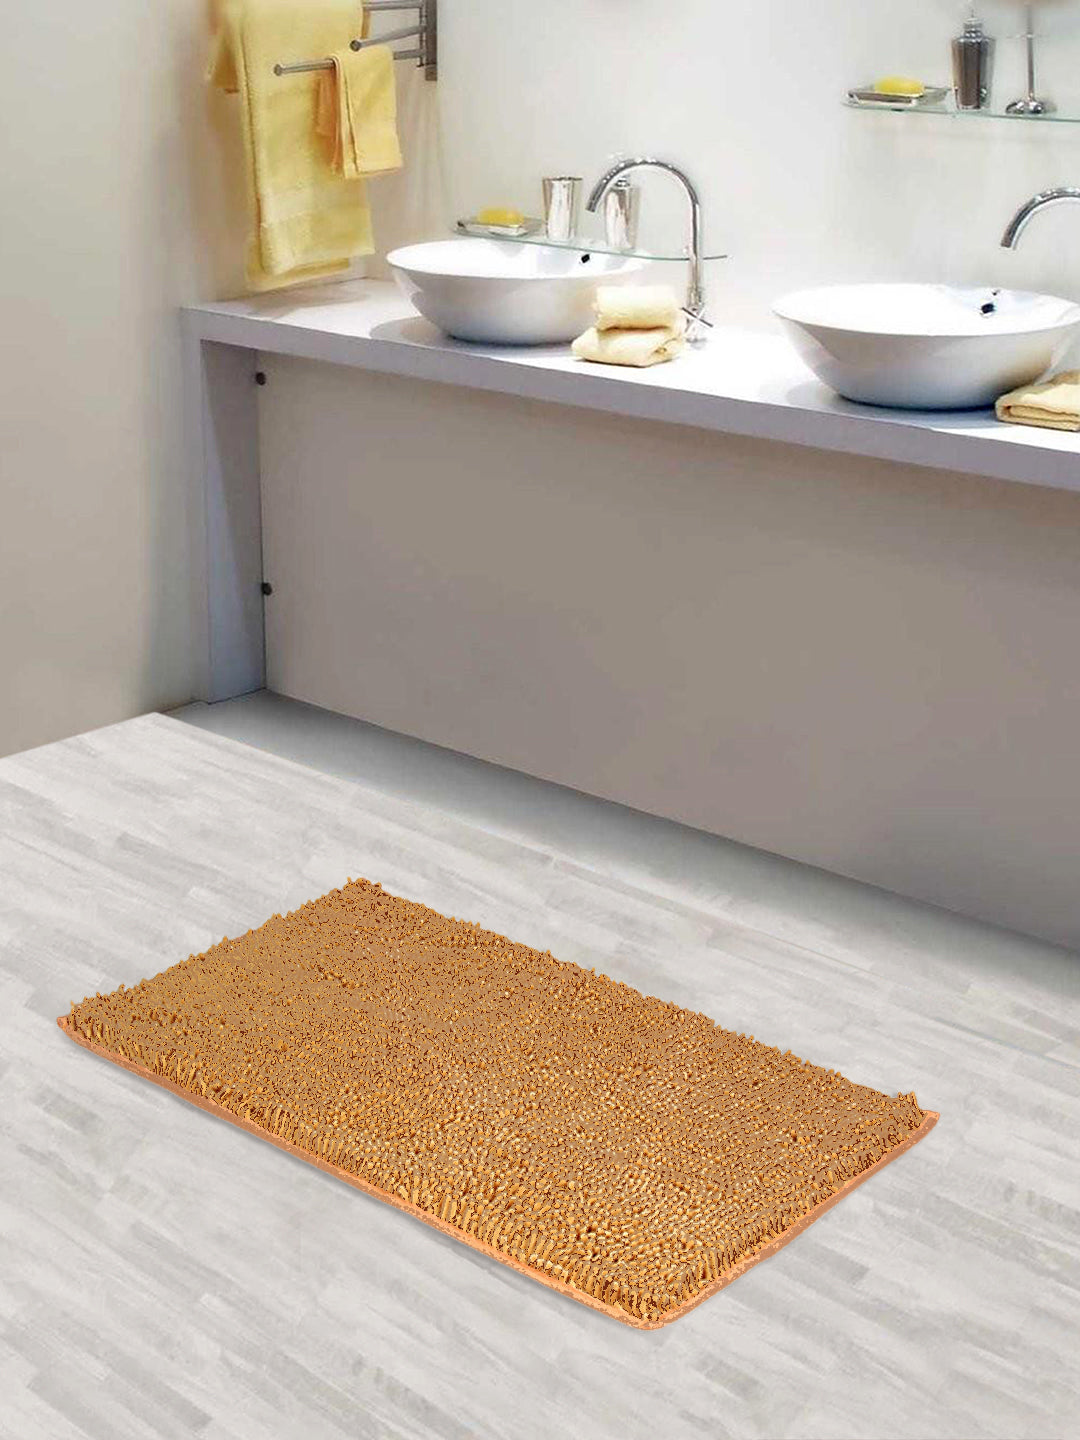 Lushomes Bathroom Mat, 2200 GSM Floor, bath mat Mat with High Pile Microfiber, anti skid mat for bathroom Floor, bath mat Non Slip Anti Slip, Premium Quality (20 x 30 inches, Single Pc, Light Brown)